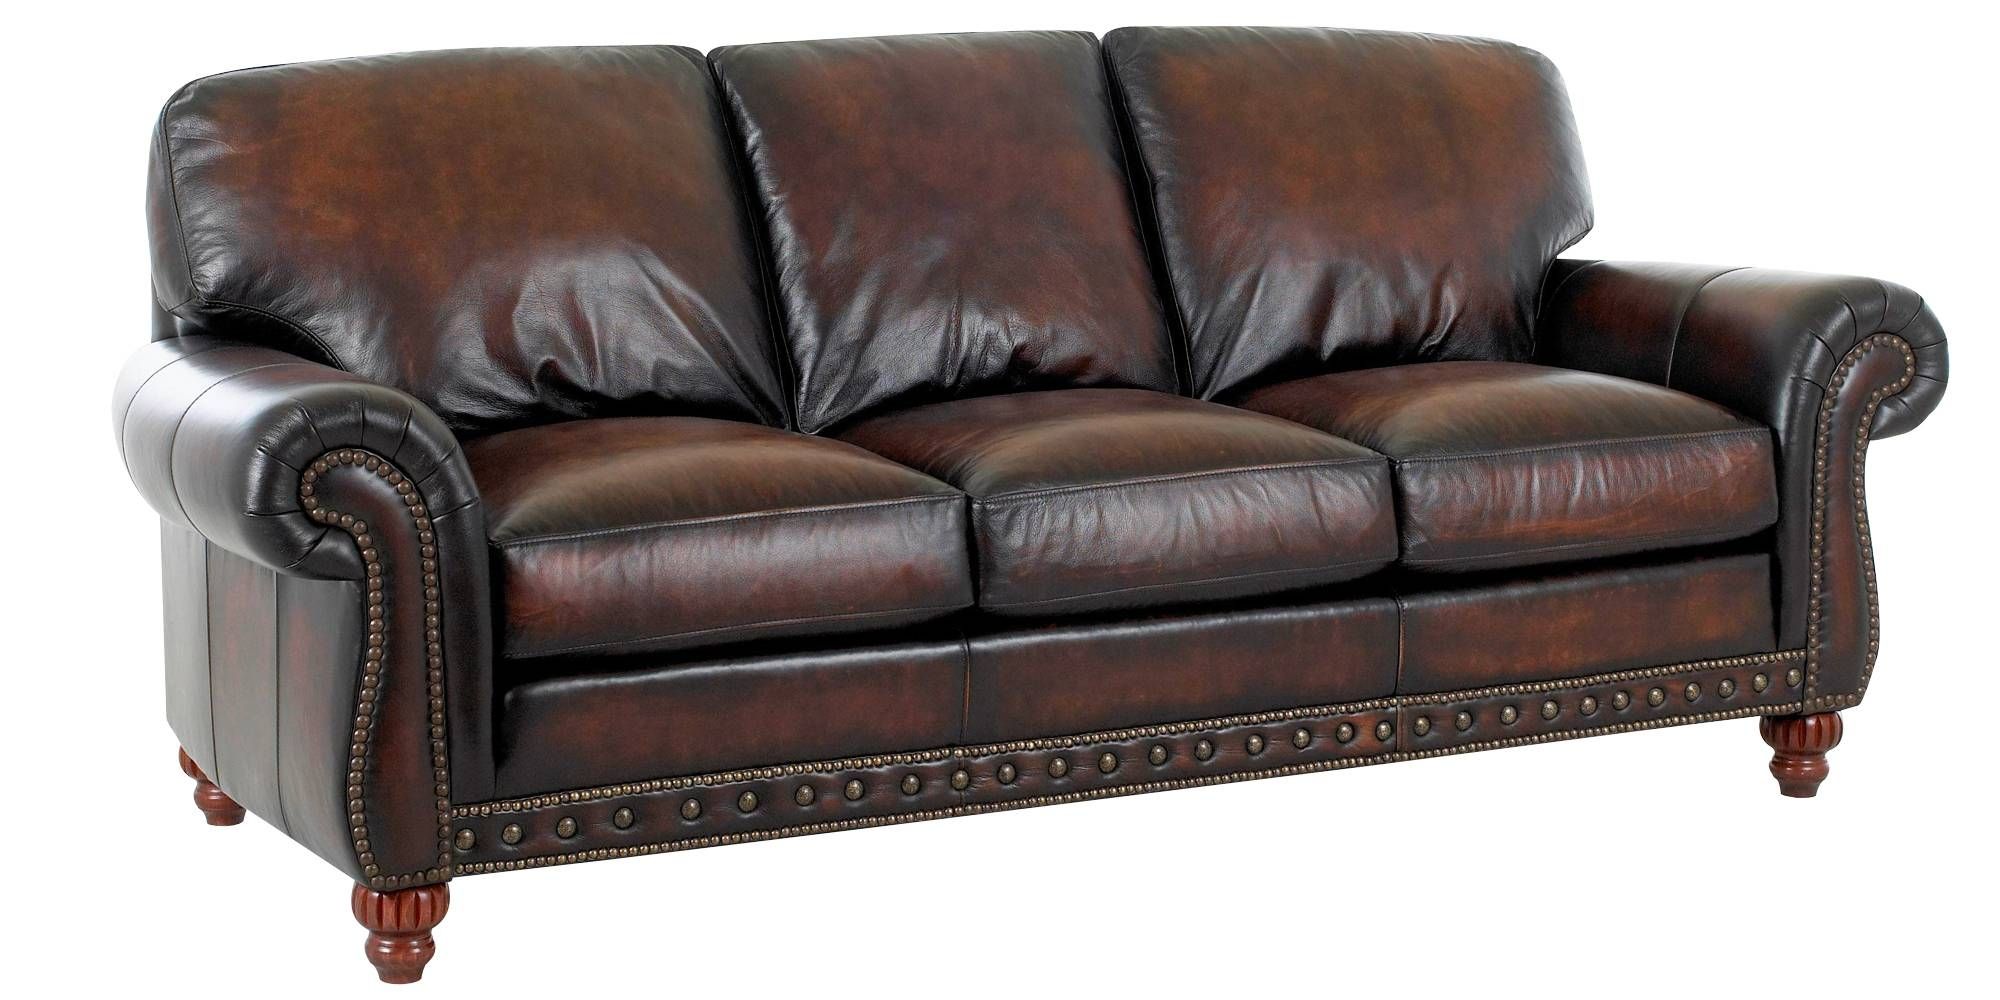 european style leather sofa for sale